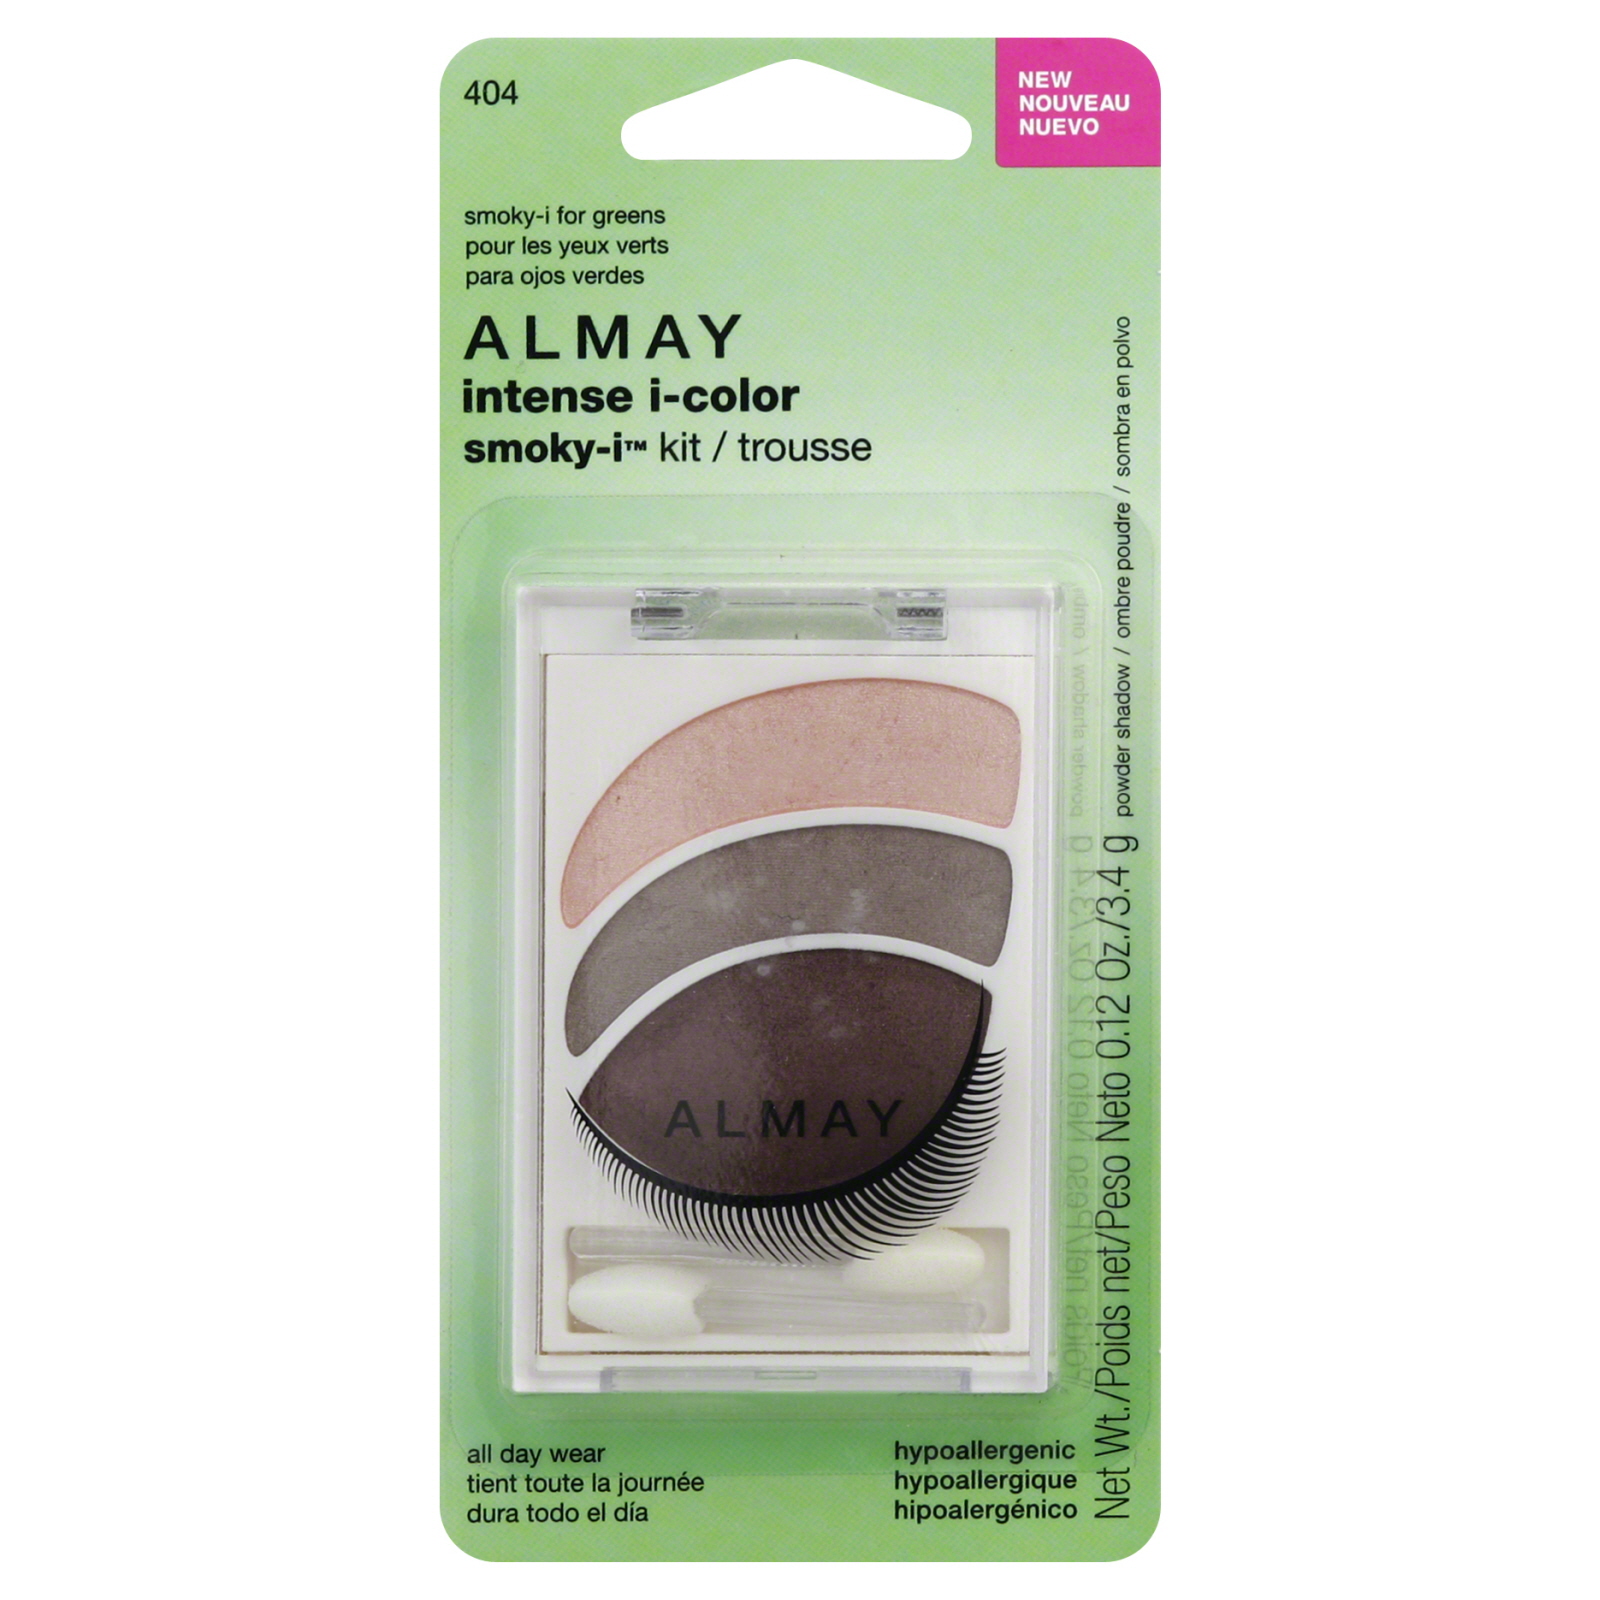 Almay Intense i-Color Smoky-i Powder Shadow Kit, Smoky-i for Greens, 0.12 oz (3.4 g)